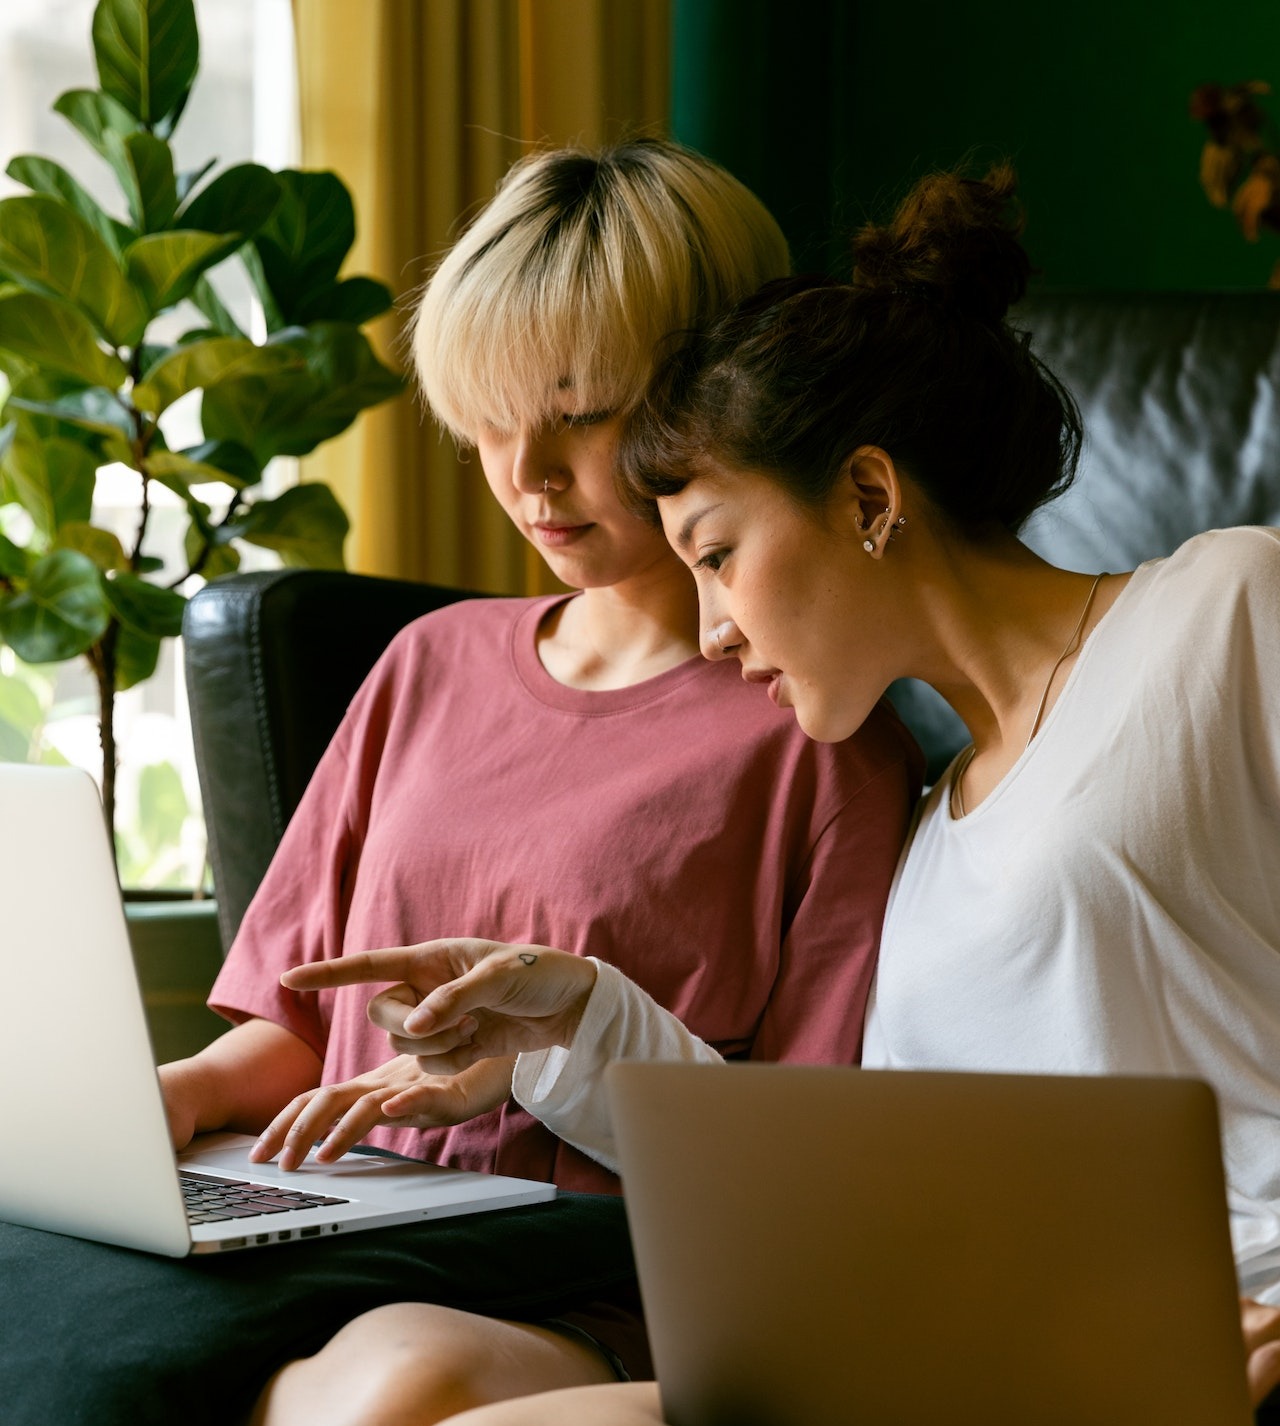 Two women reading on their laptops